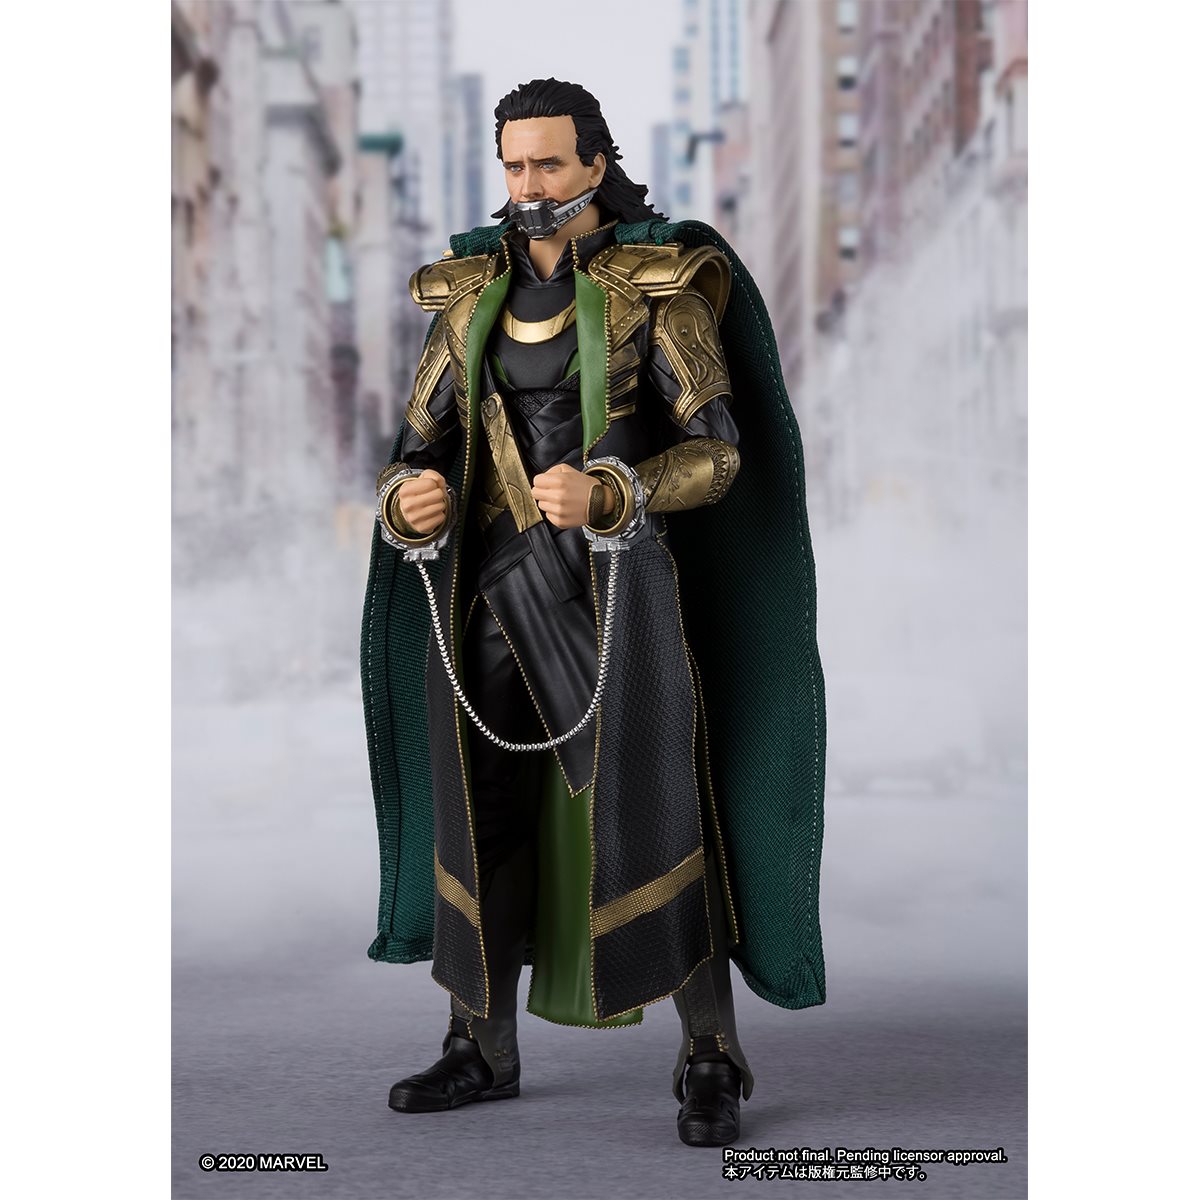 Bandai Tamashii Nations S.h.figuarts Marvel The Avengers Loki Action Figure for sale online 